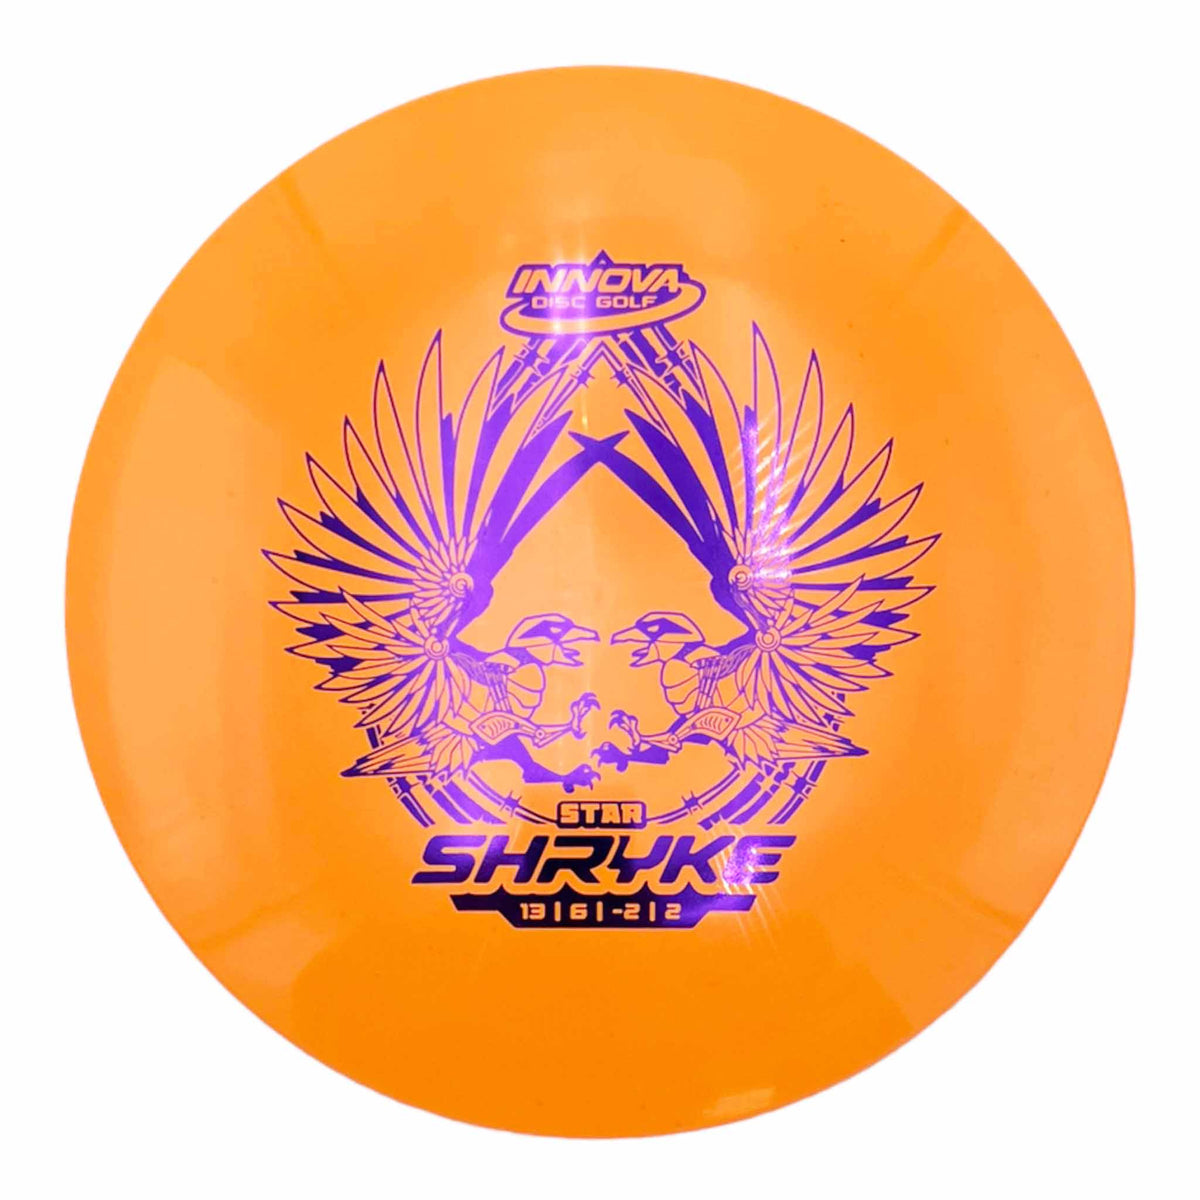 Innova Disc Golf Star Shryke distance driver - Orange / Purple